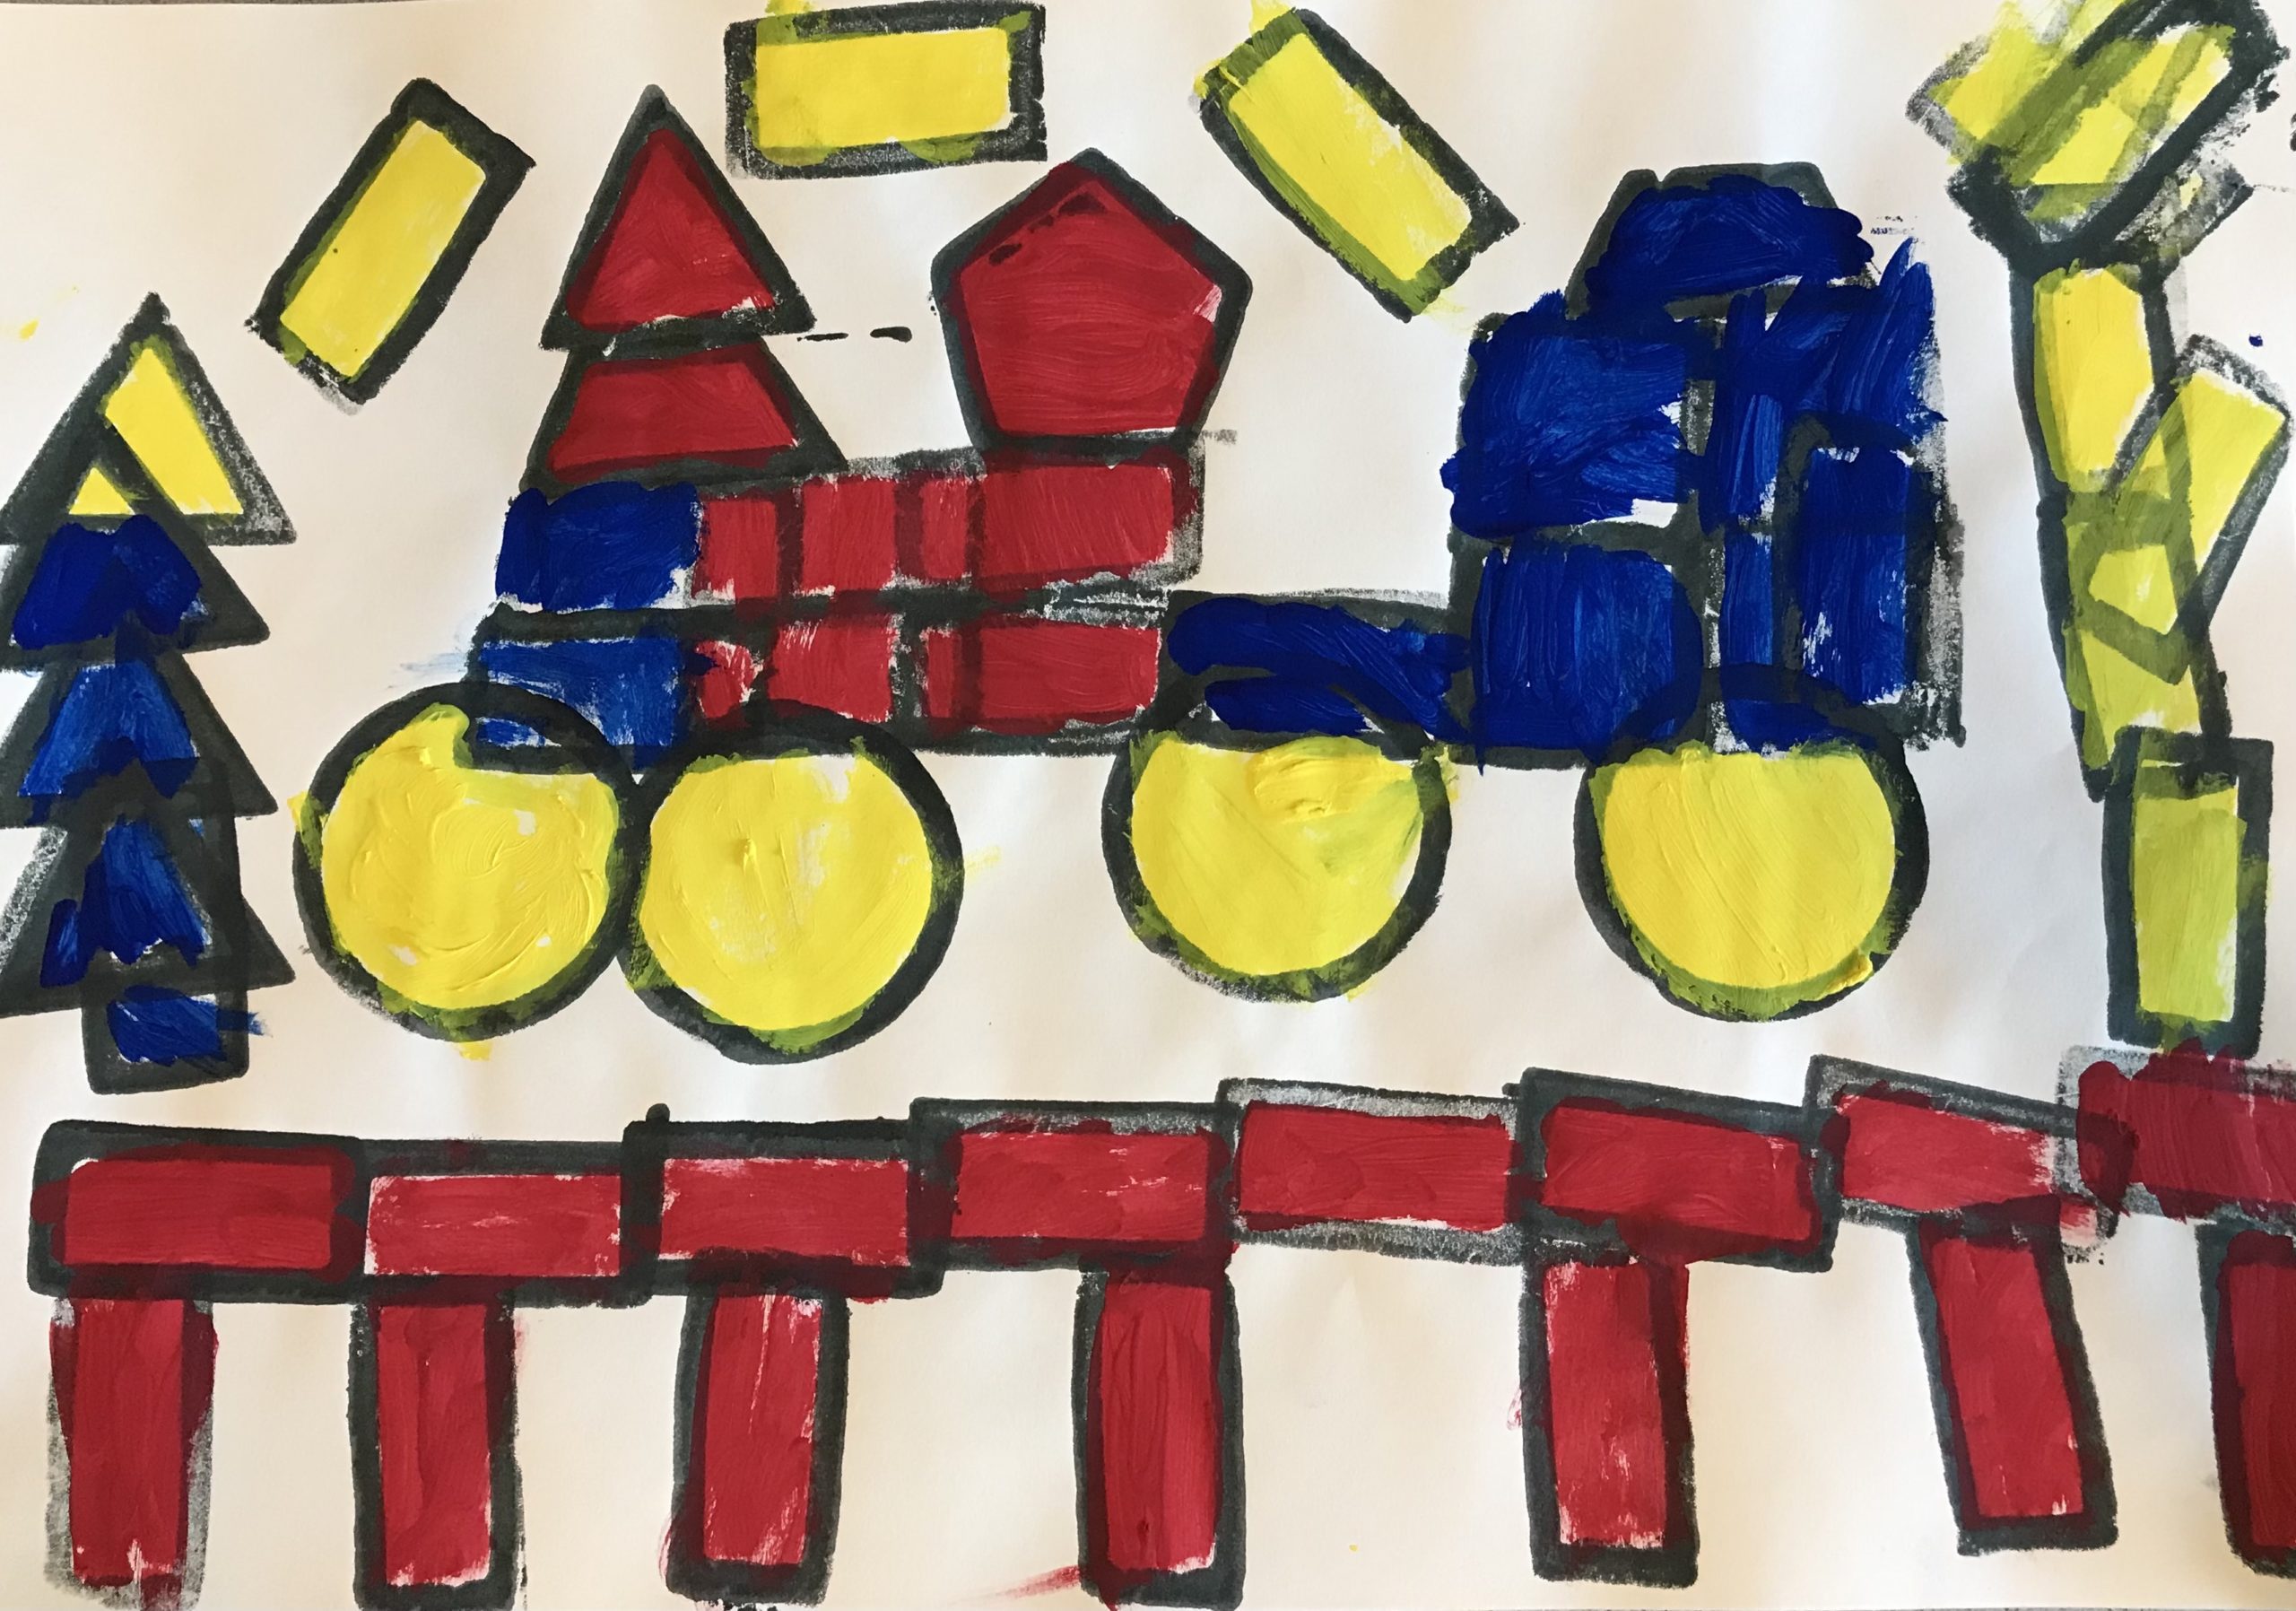 elementary school artwork depicting train on tracks.